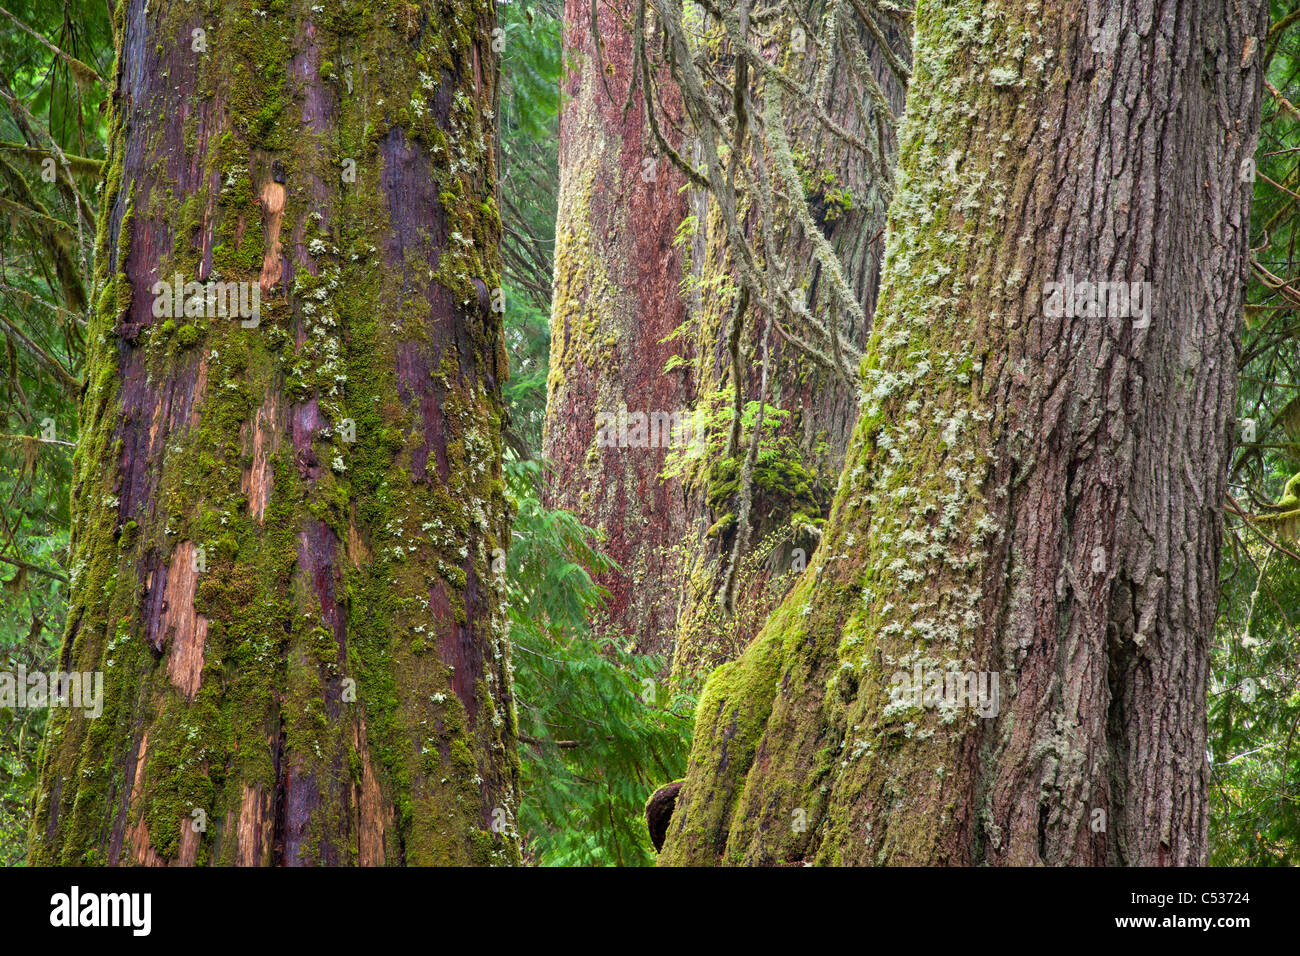 old-growth forest, Grove of the Patriarchs, Mount Rainier National Park, Washington Stock Photo